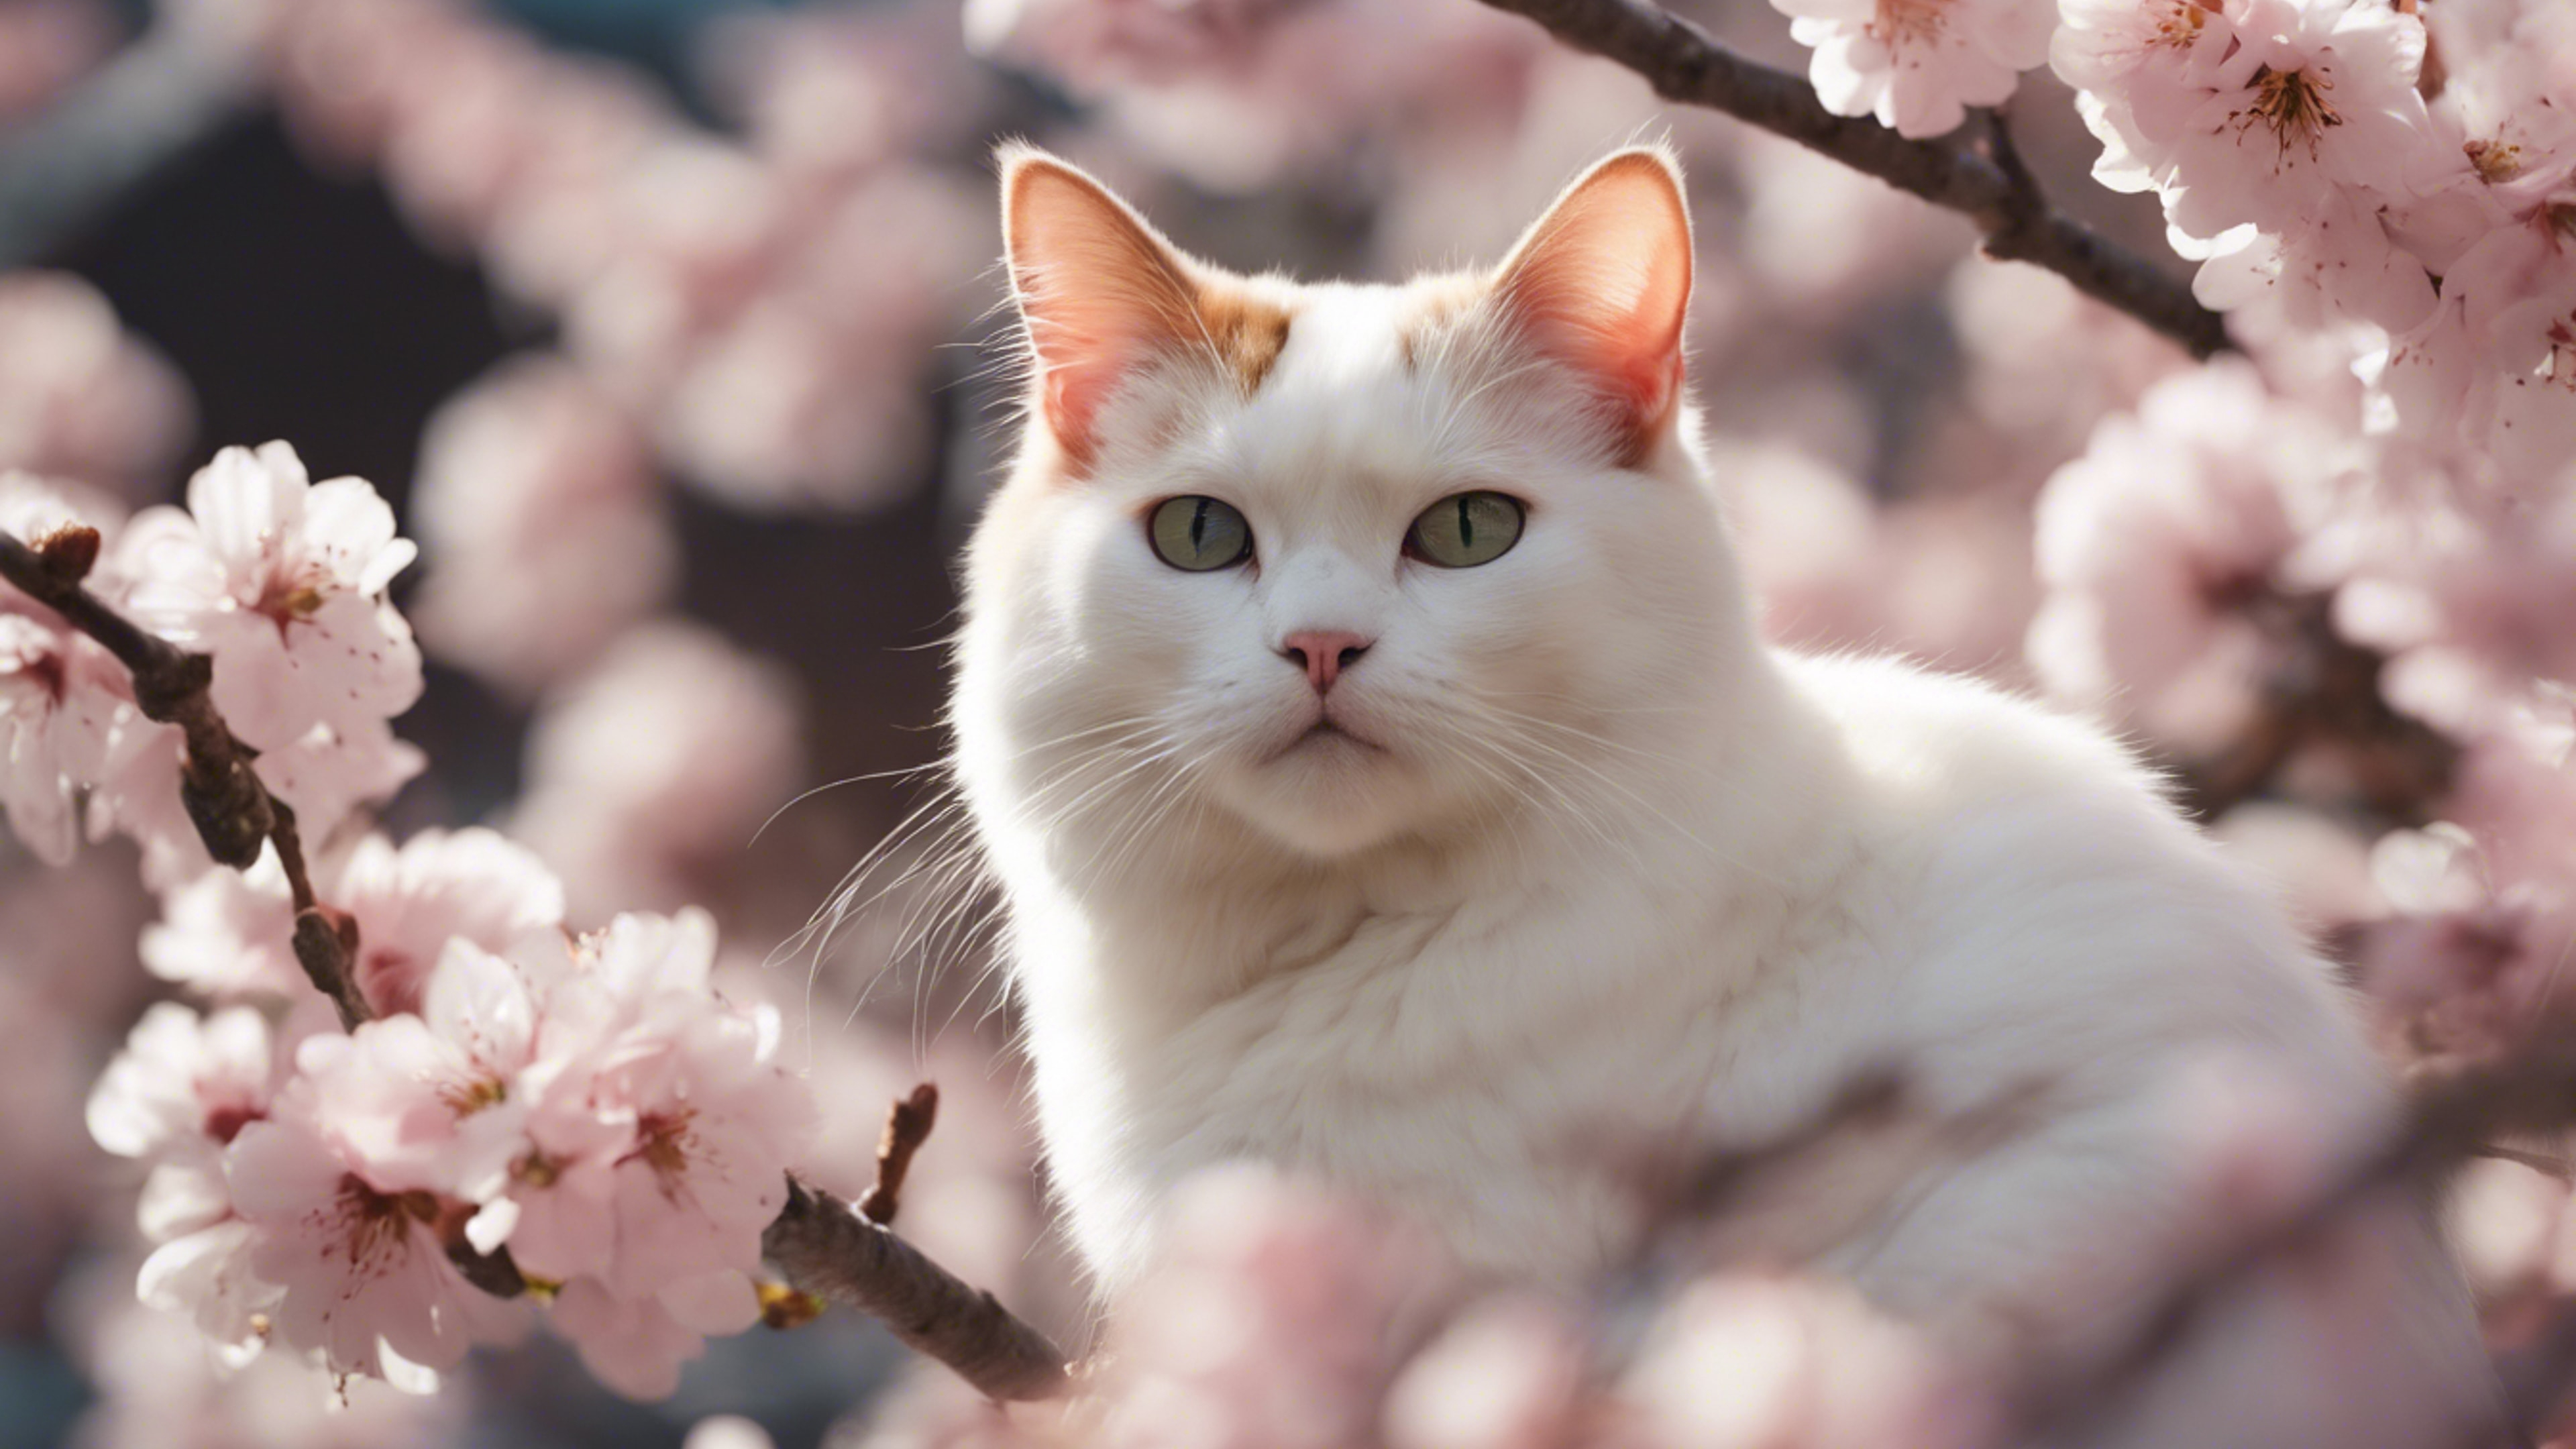 A Japanese Bobtail cat meditating under a cherry blossom tree at the peak of its bloom.壁紙[62820546f818474783c1]